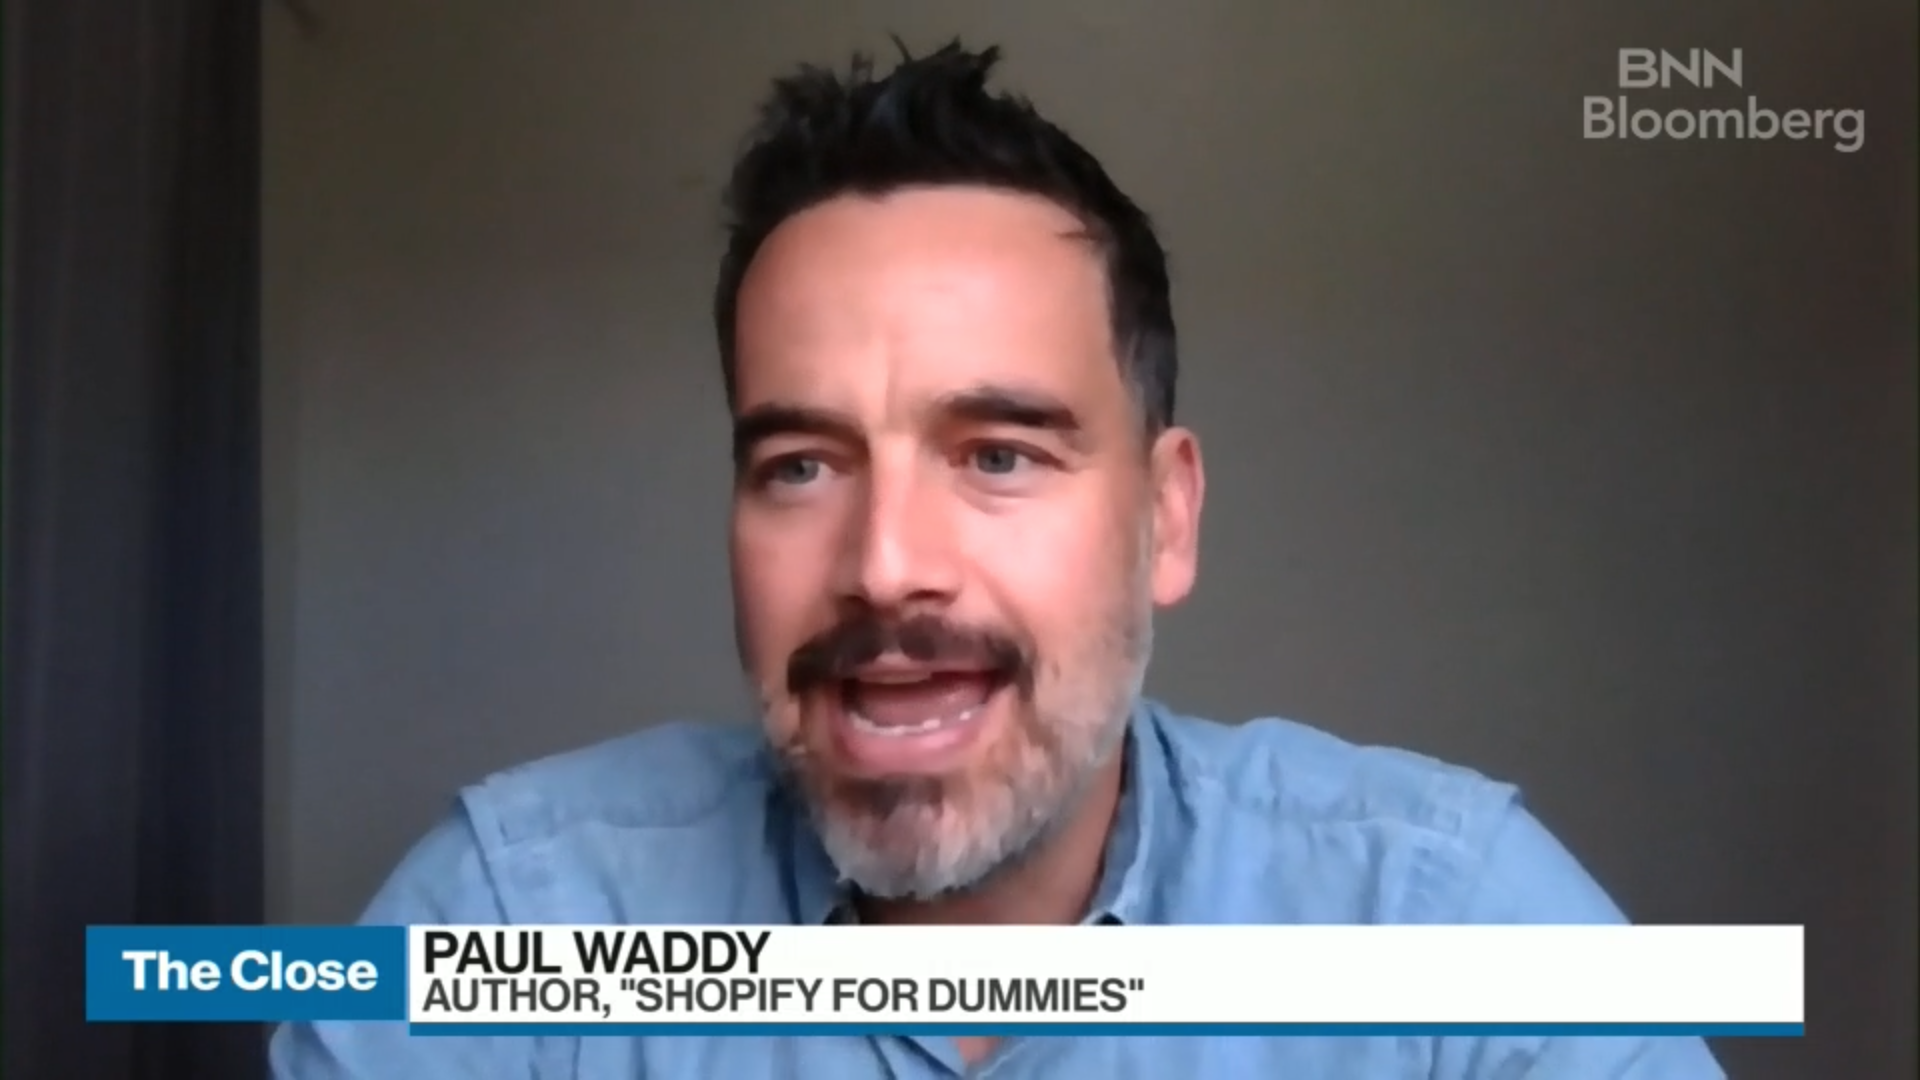 Paul Waddy on BNN Bloomberg